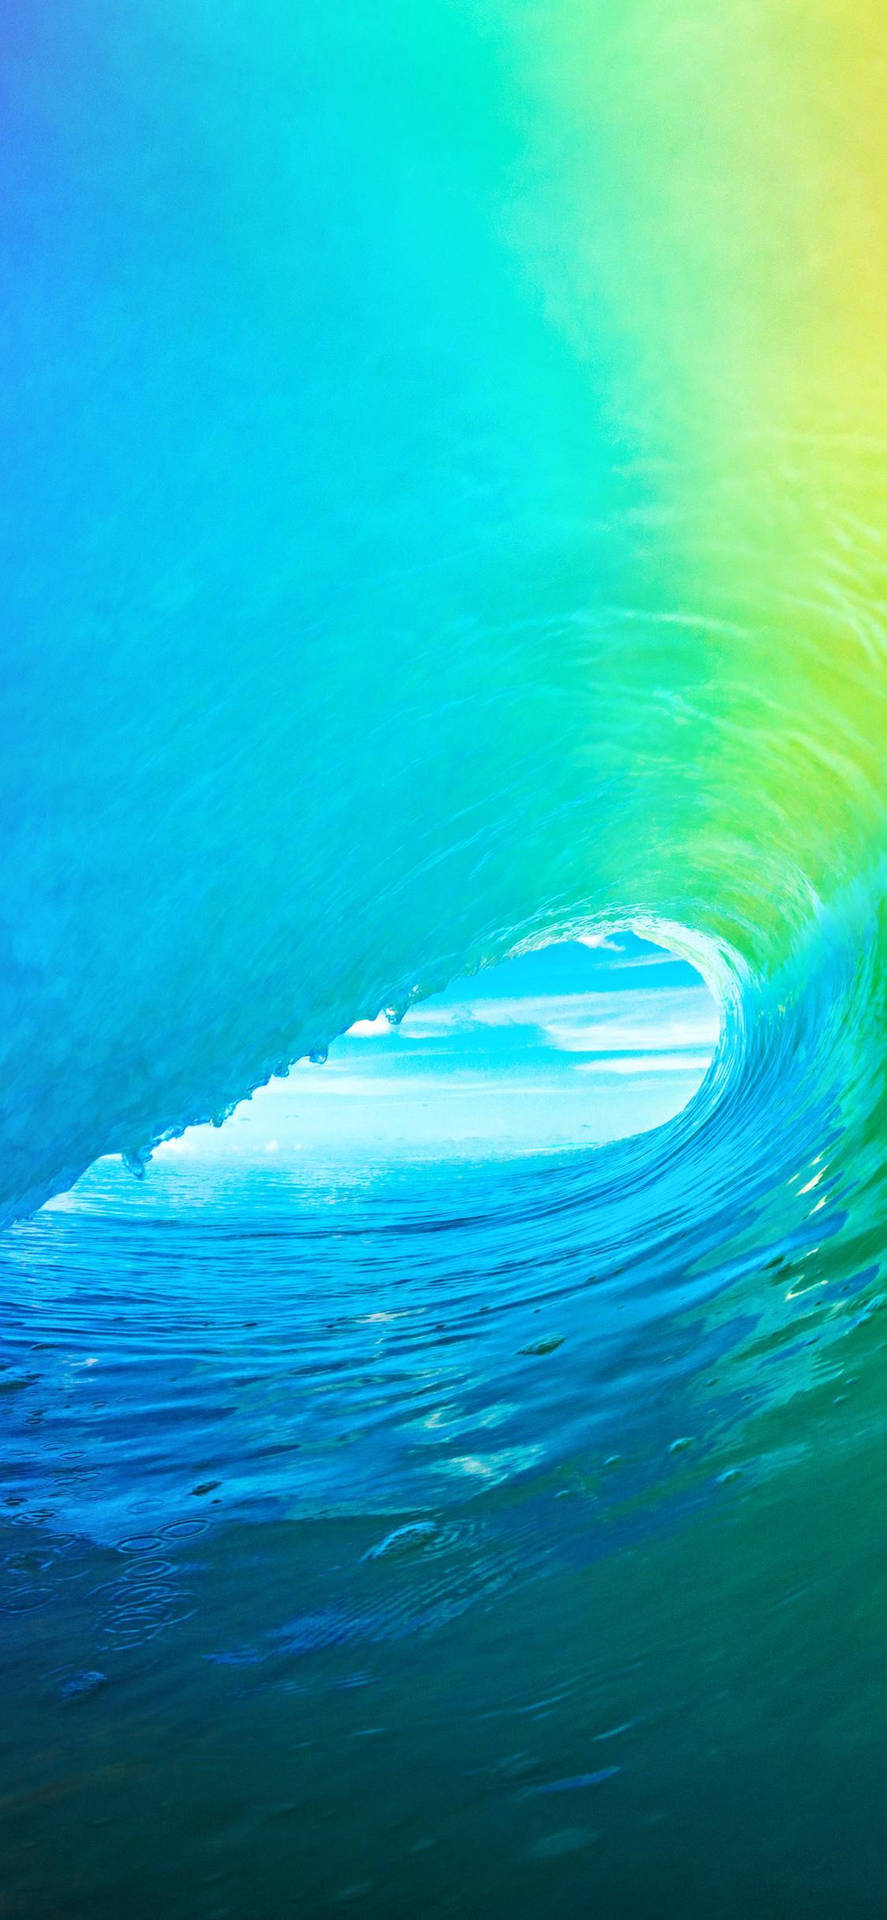 iPhone X Original Ocean Blue Waves Wallpaper